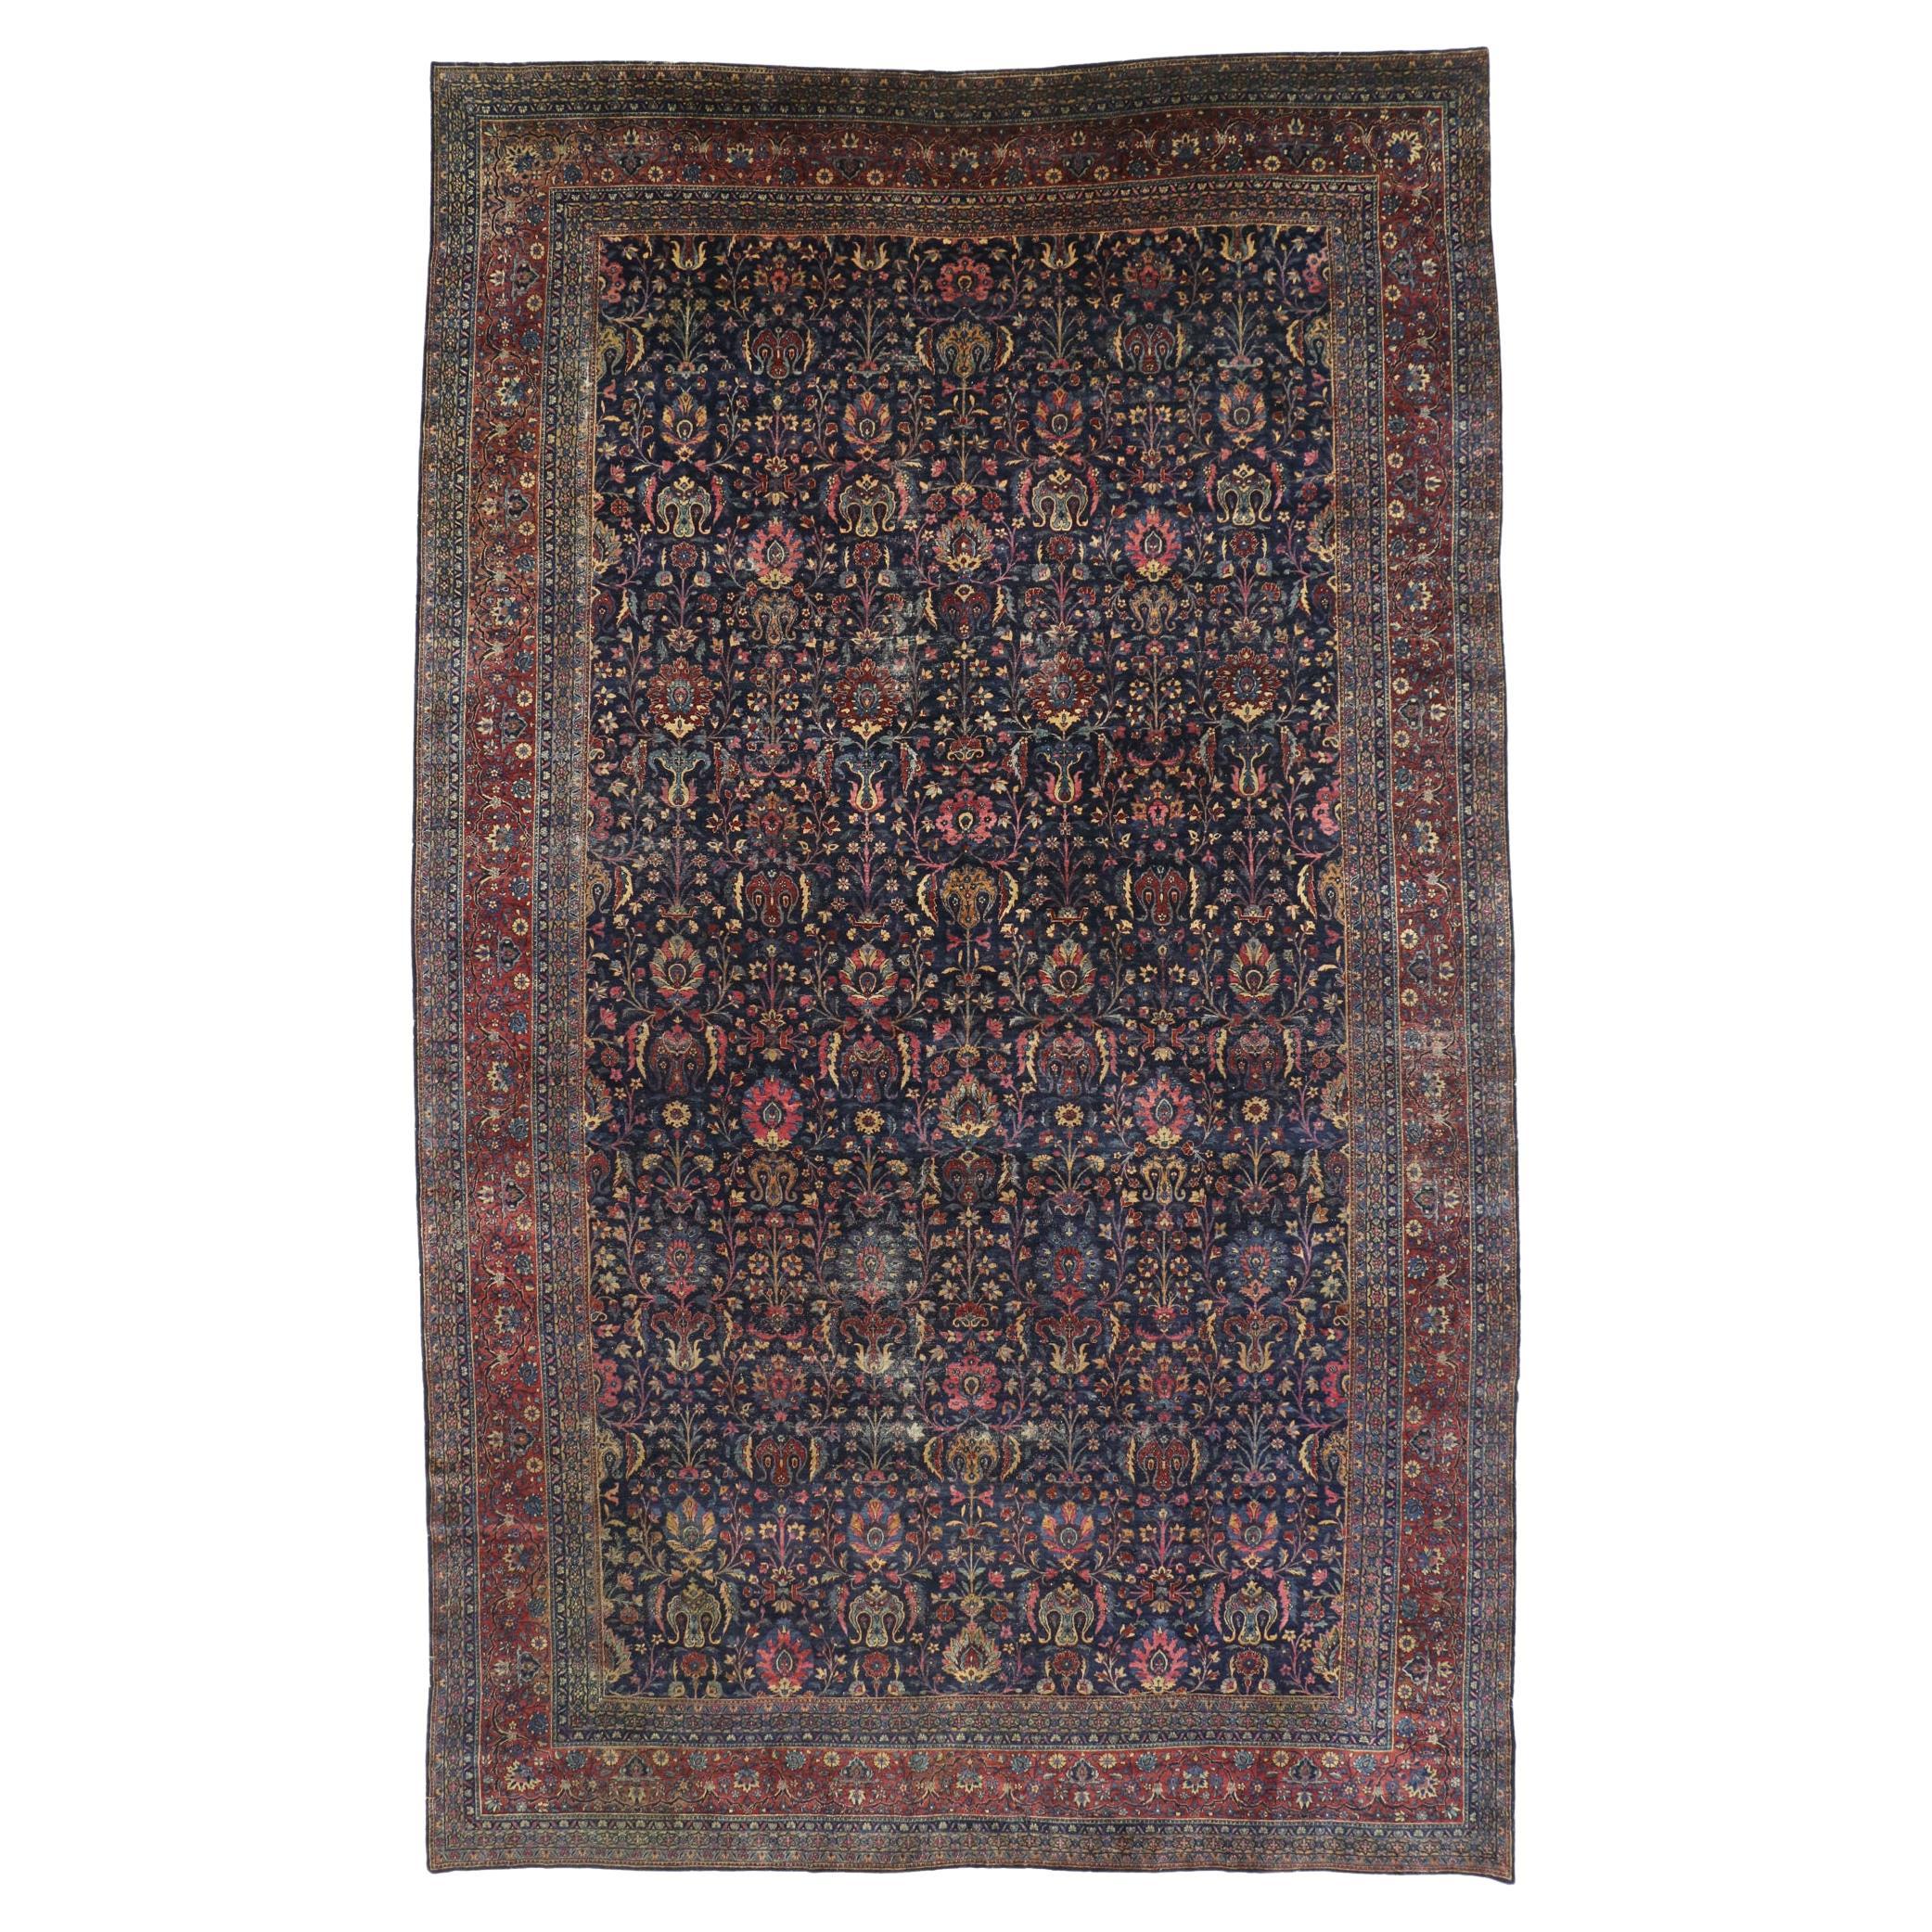 Antique Persian Kerman Rug, Hotel Lobby Size Carpet